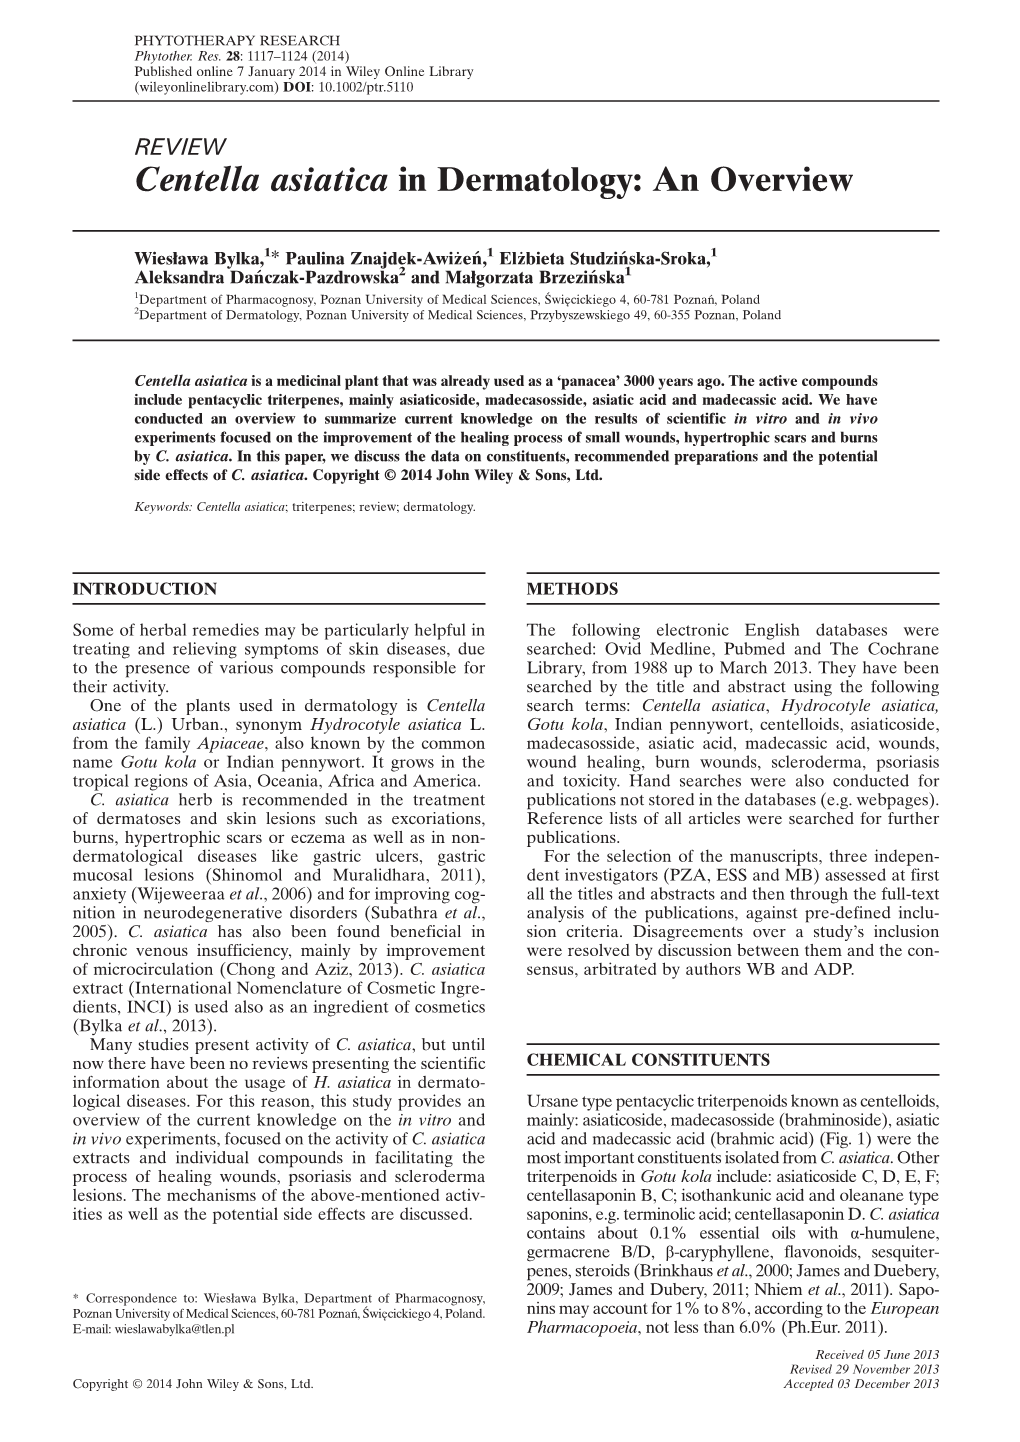 Centella Asiatica in Dermatology: an Overview